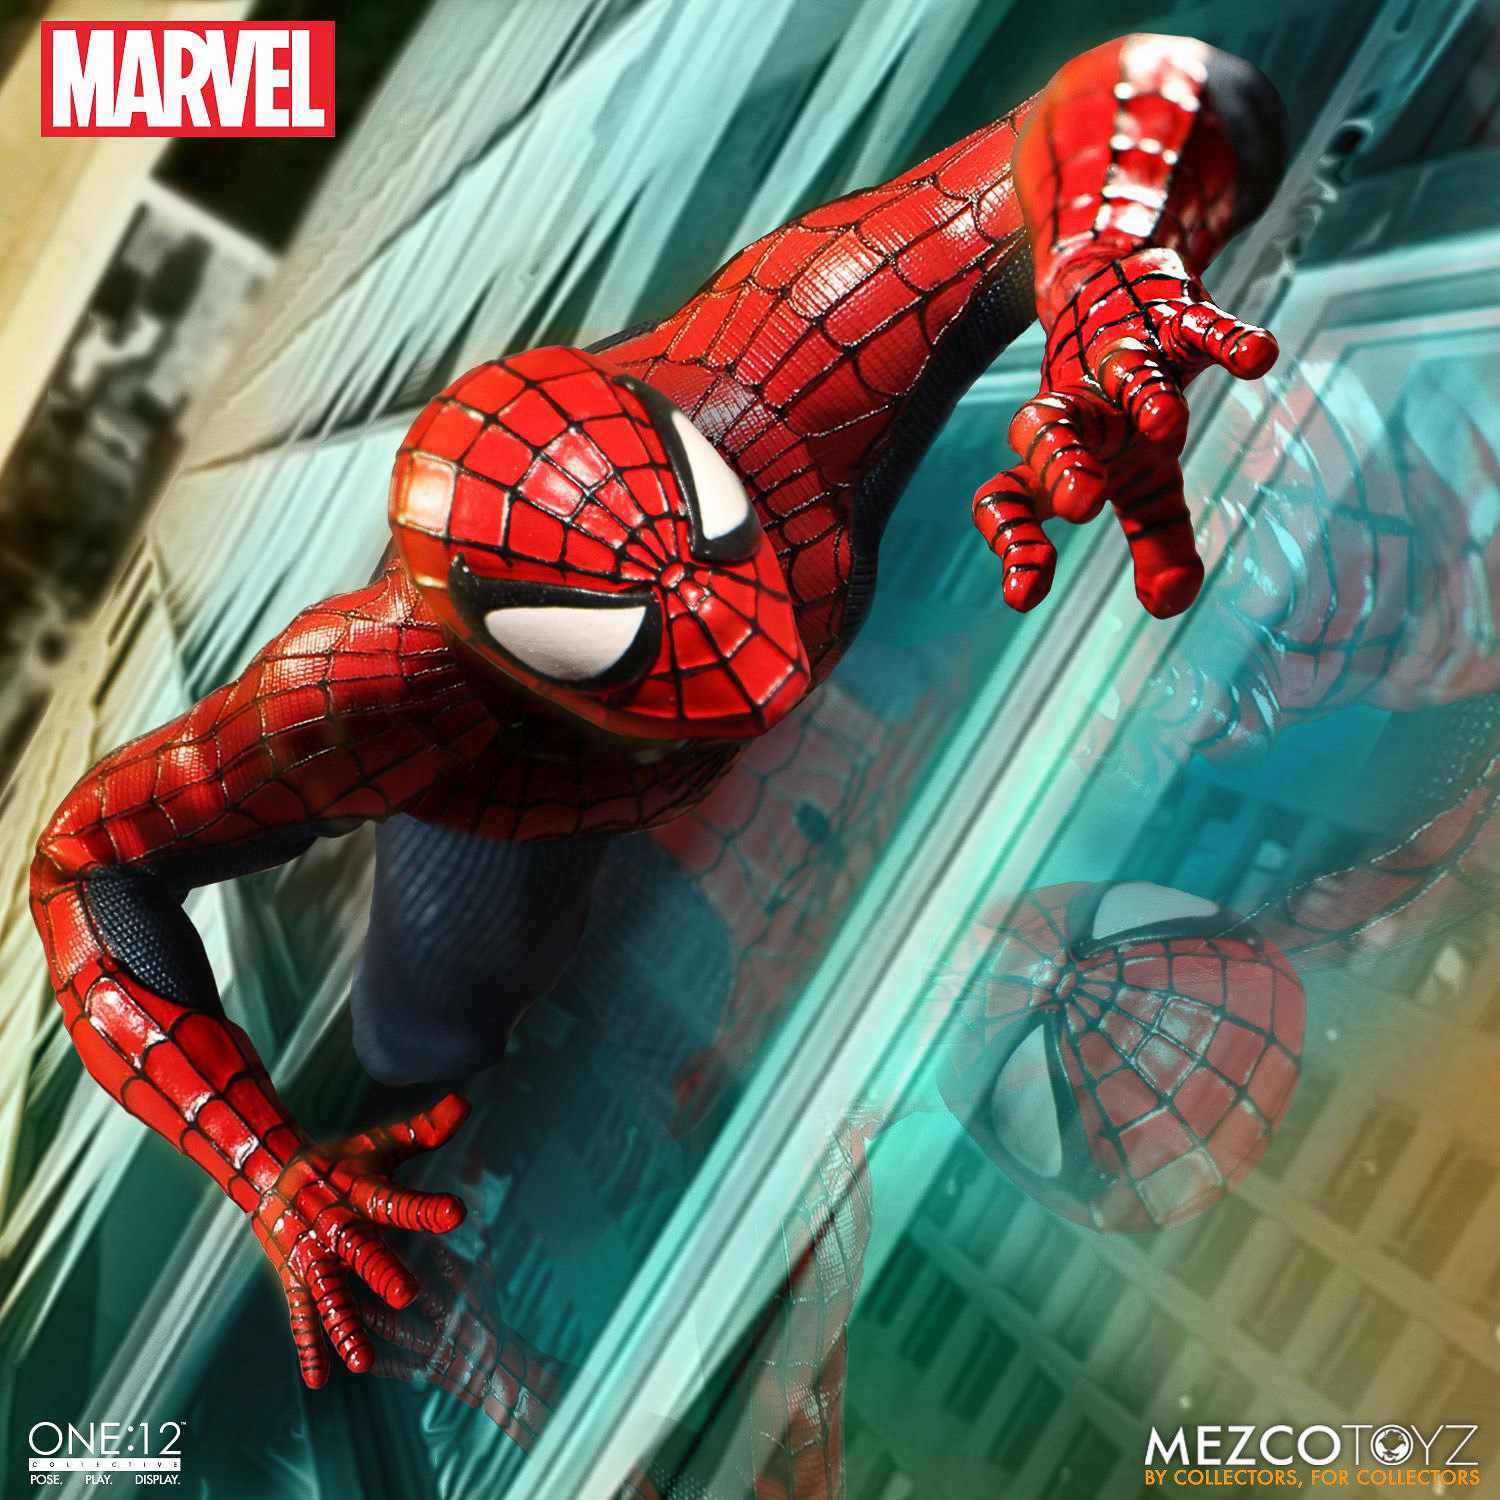 Spider-Man-One-12-Collective-Mezco-Toyz-009.jpg